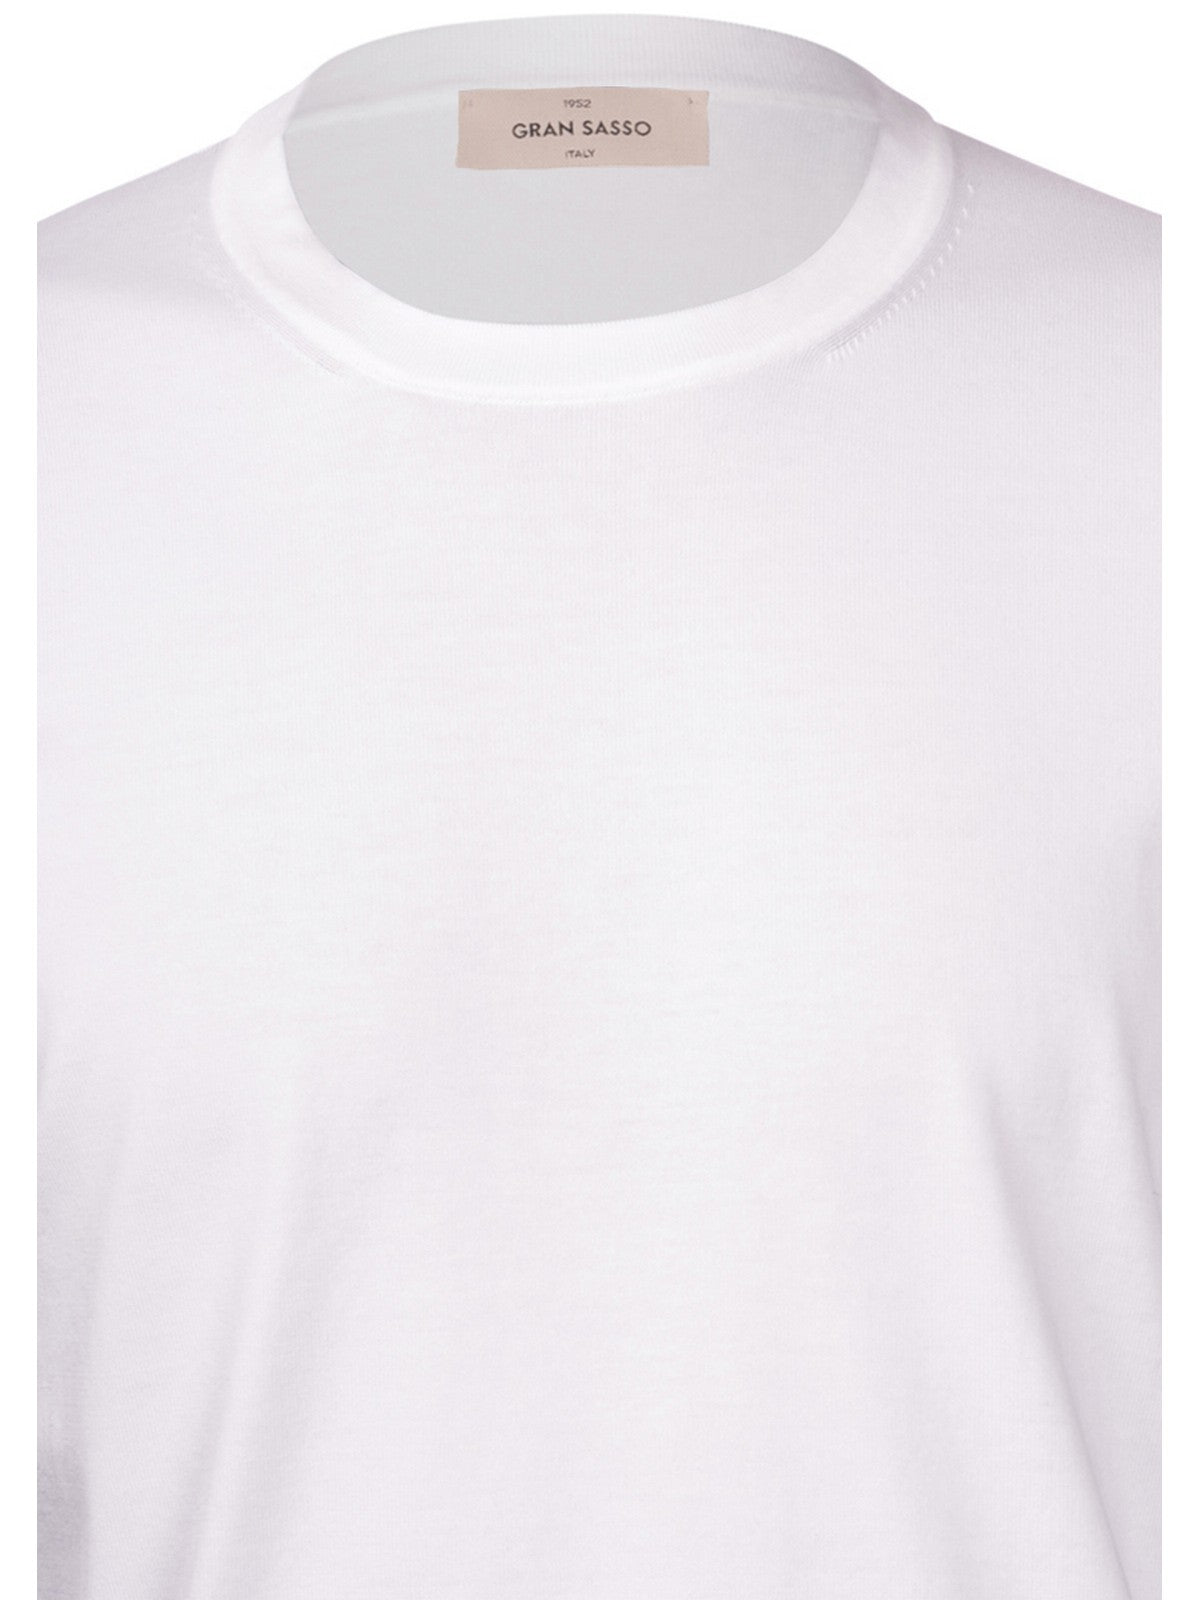 GRAN SASSO T-Shirt et polo pour hommes 43168/21820 001 Blanc